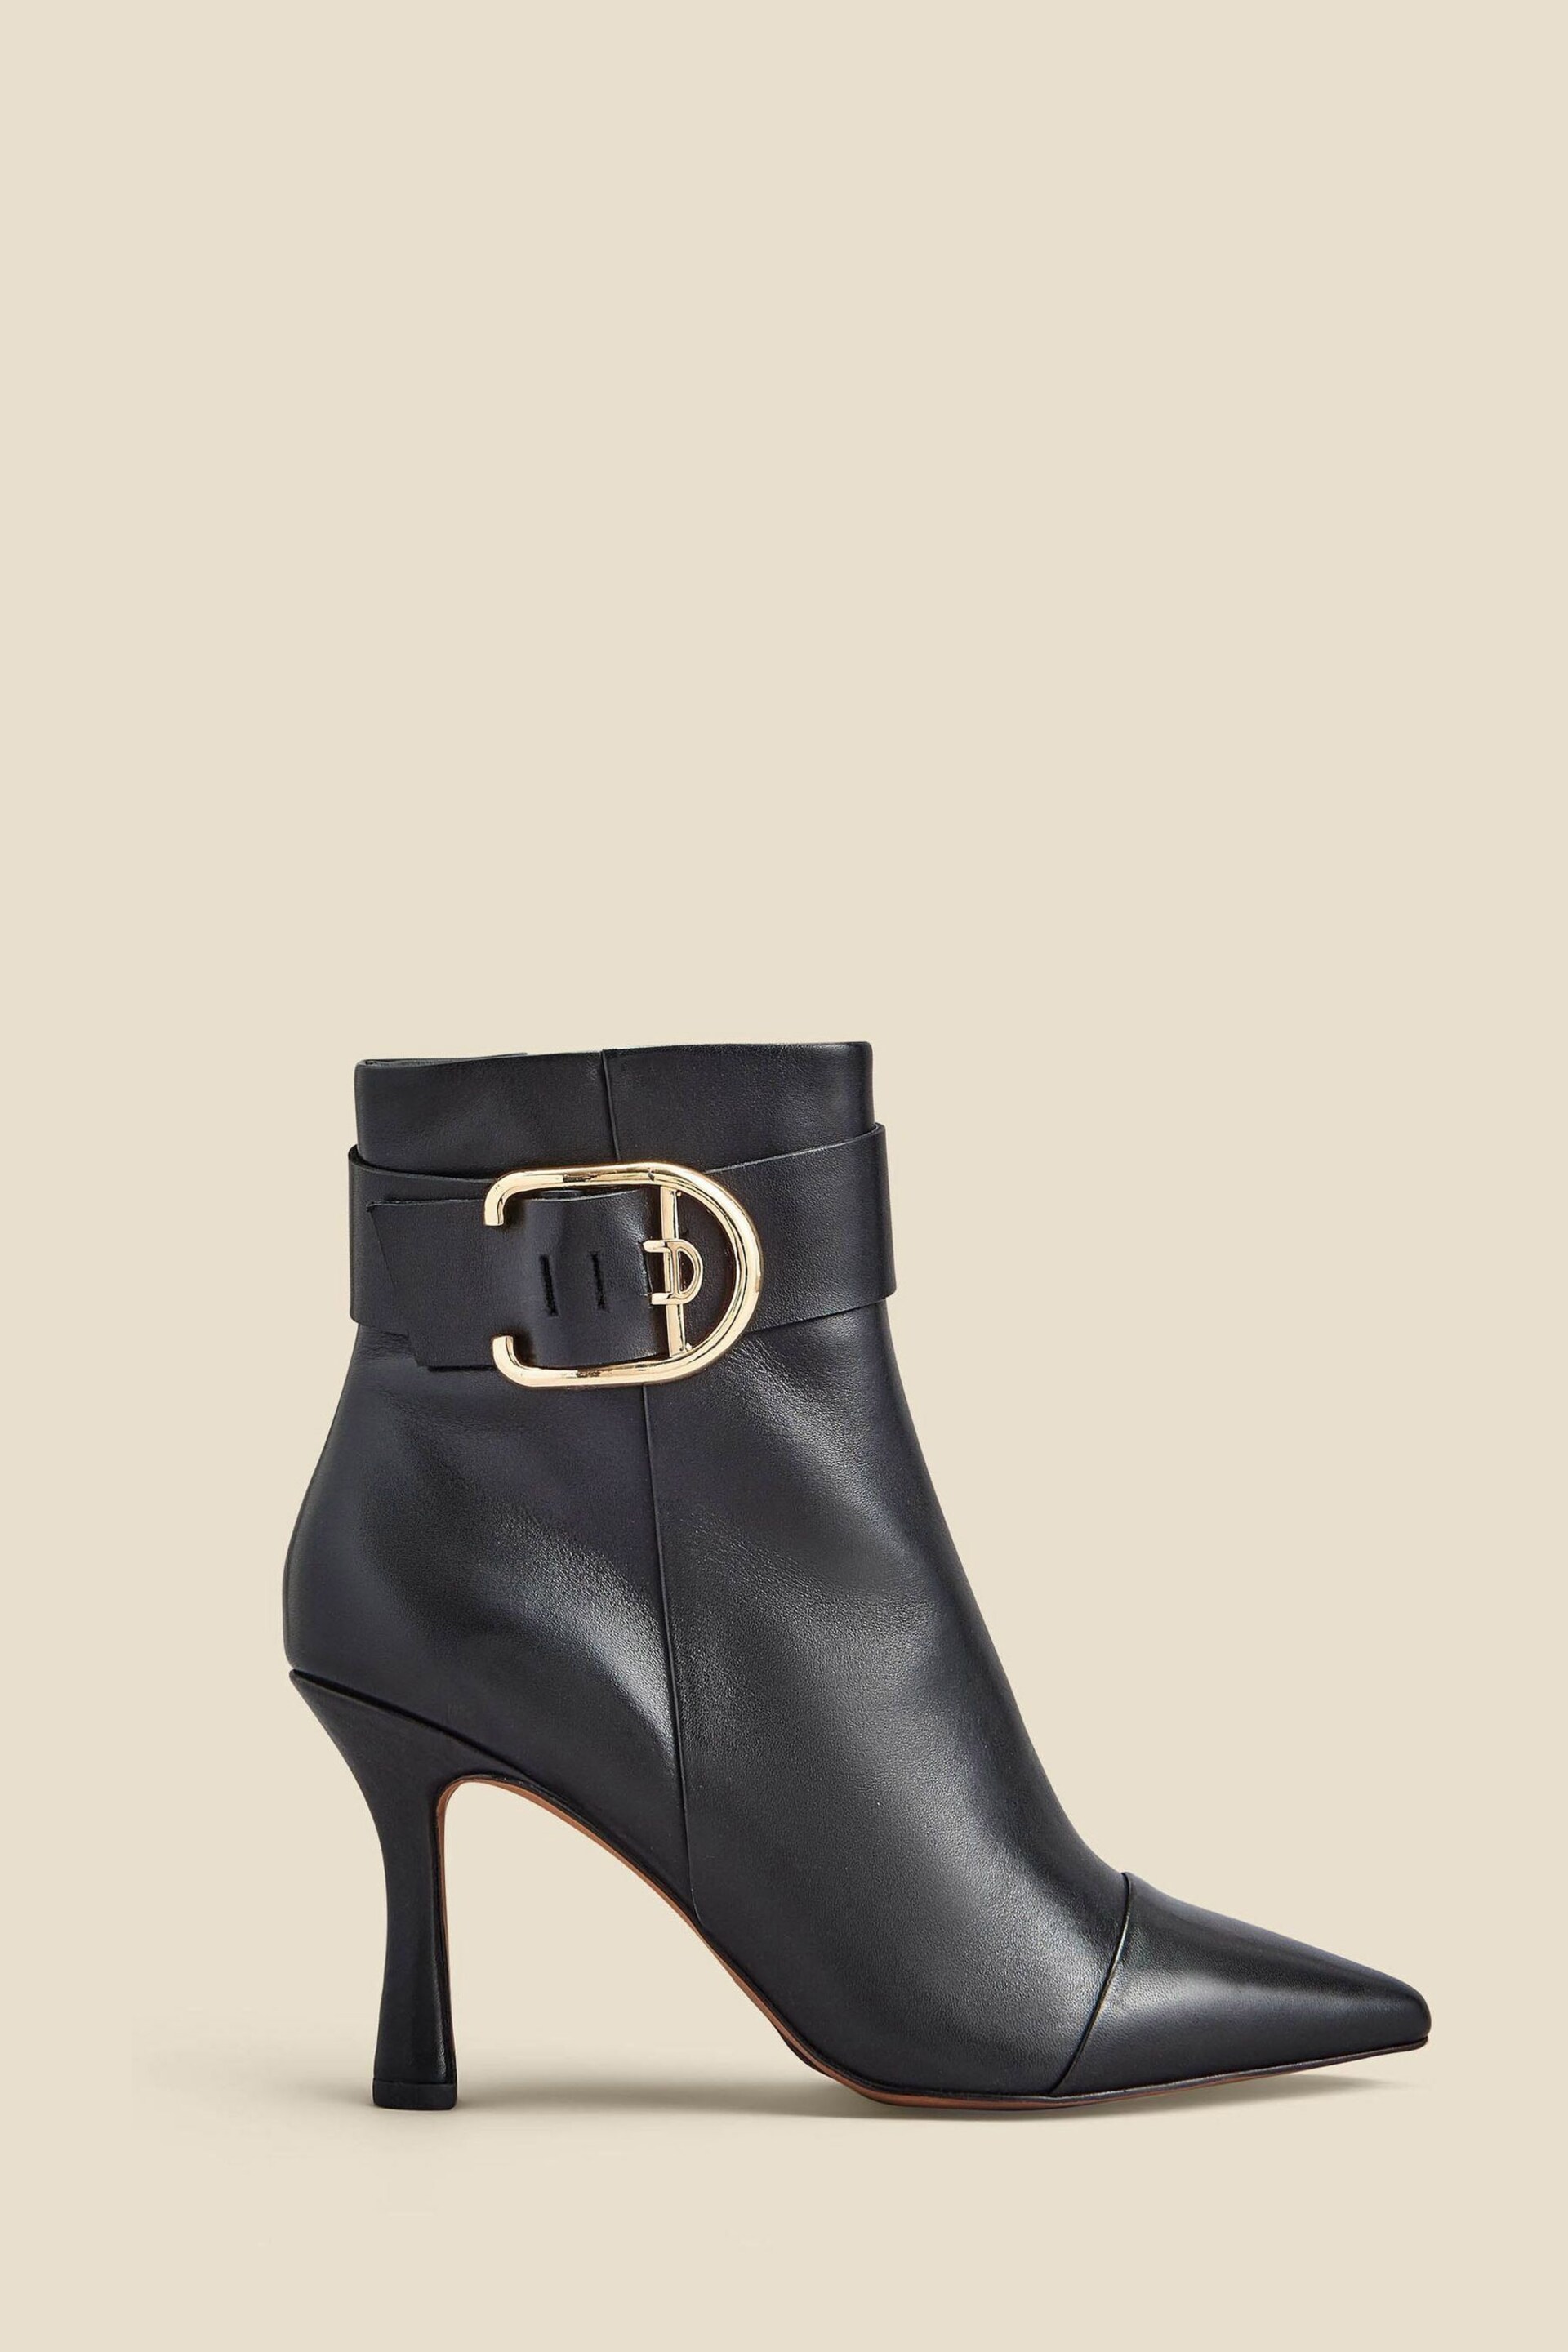 Sosandar Black Leather Buckle Detail Flared Heel Ankle Boots - Image 1 of 4